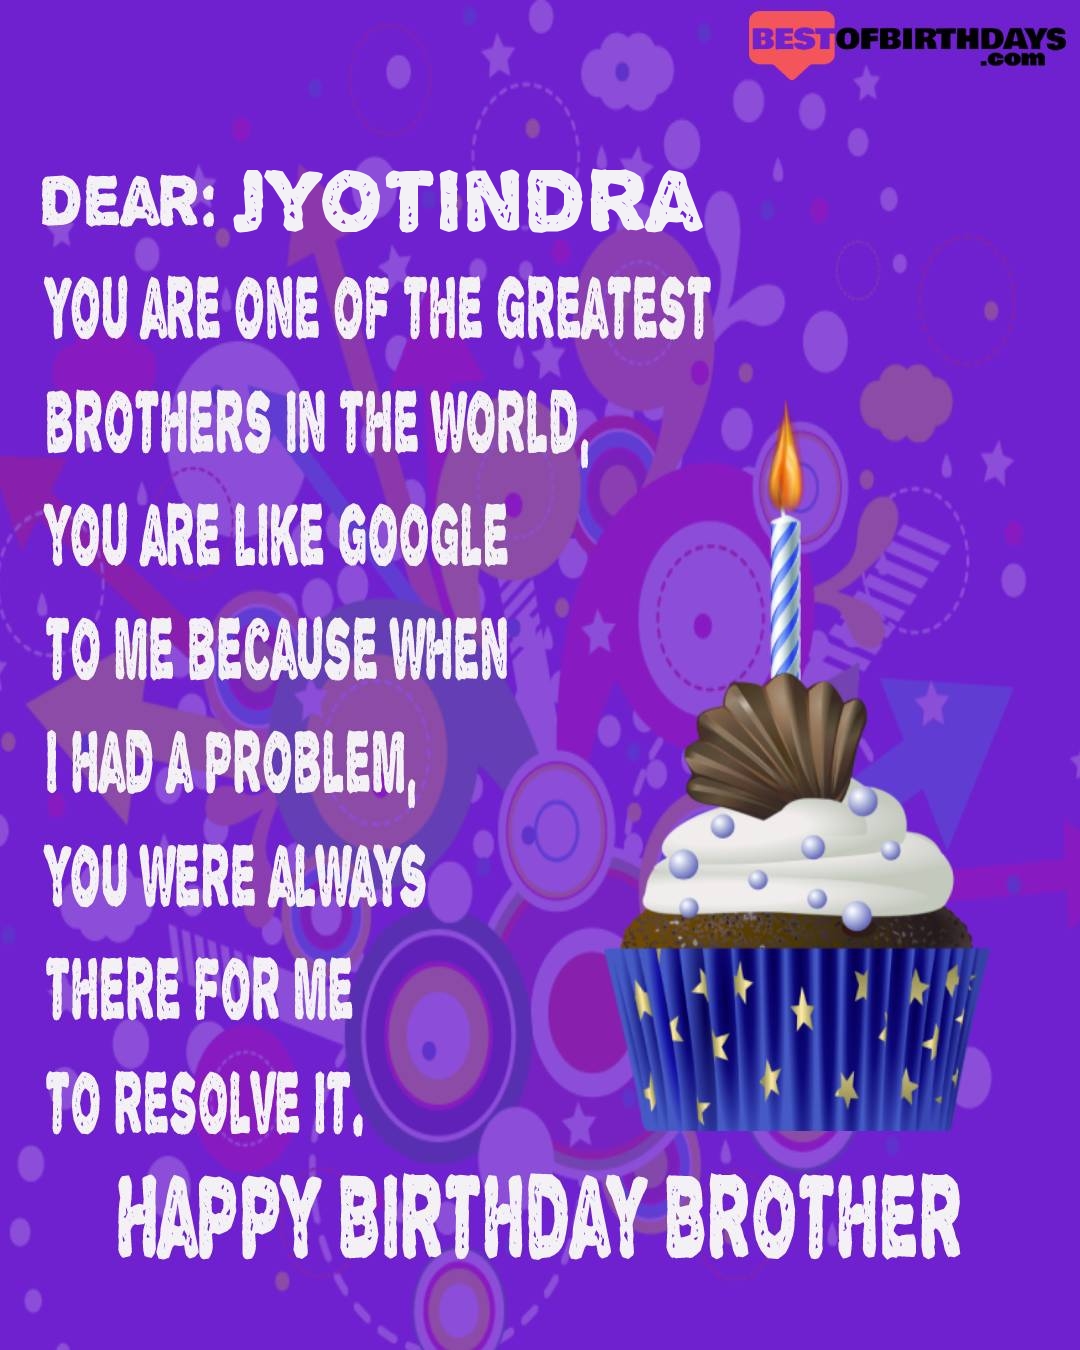 Happy birthday jyotindra bhai brother bro